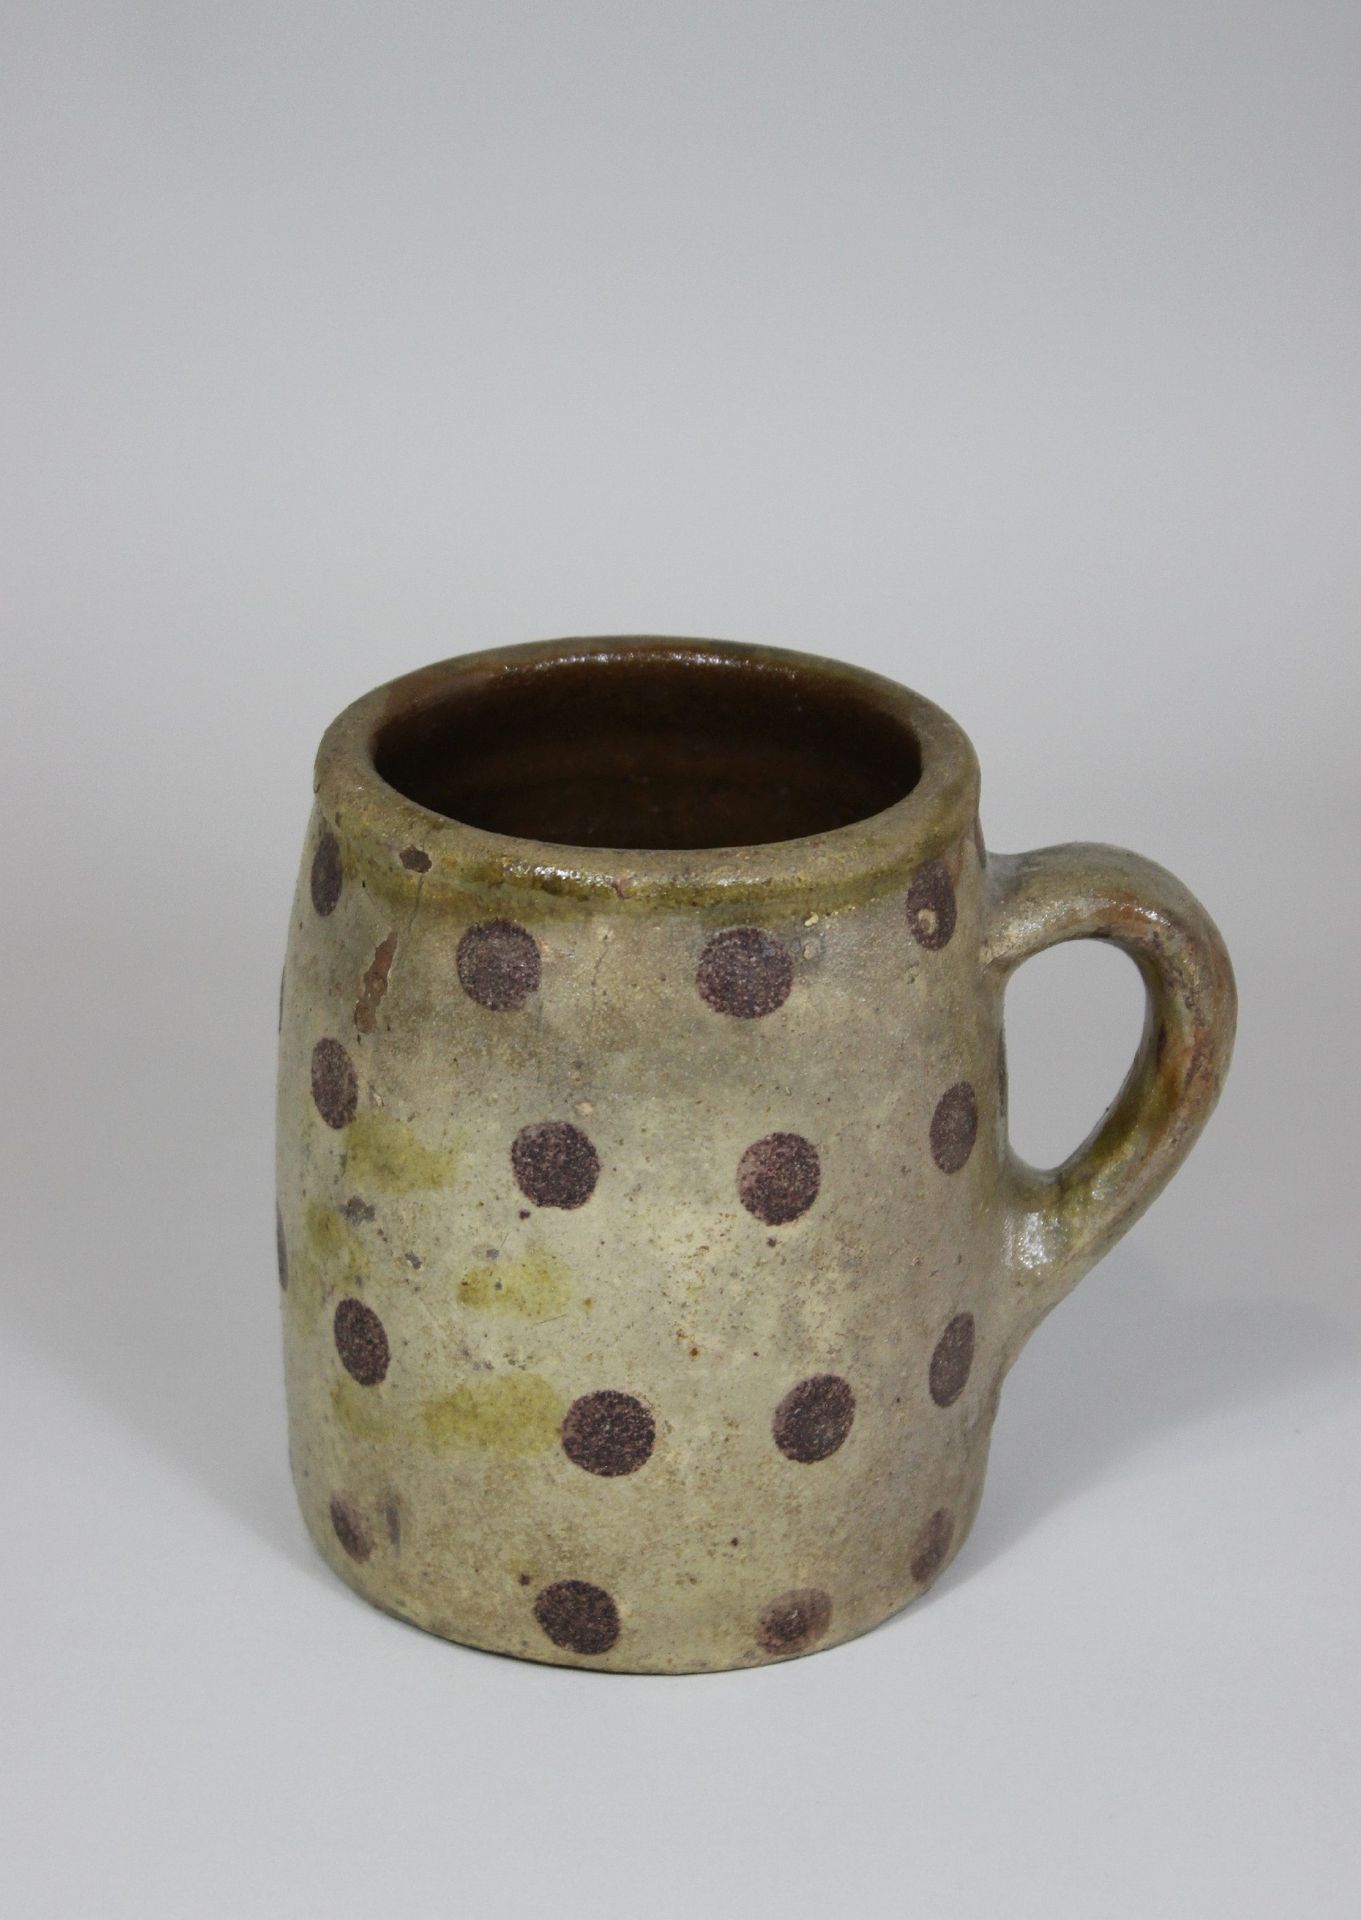 Keramikkrug, Österreich 19. Jh. 陶瓷壶，奥地利，19世纪，点状。高：13厘米。状况良好，与年龄有关。